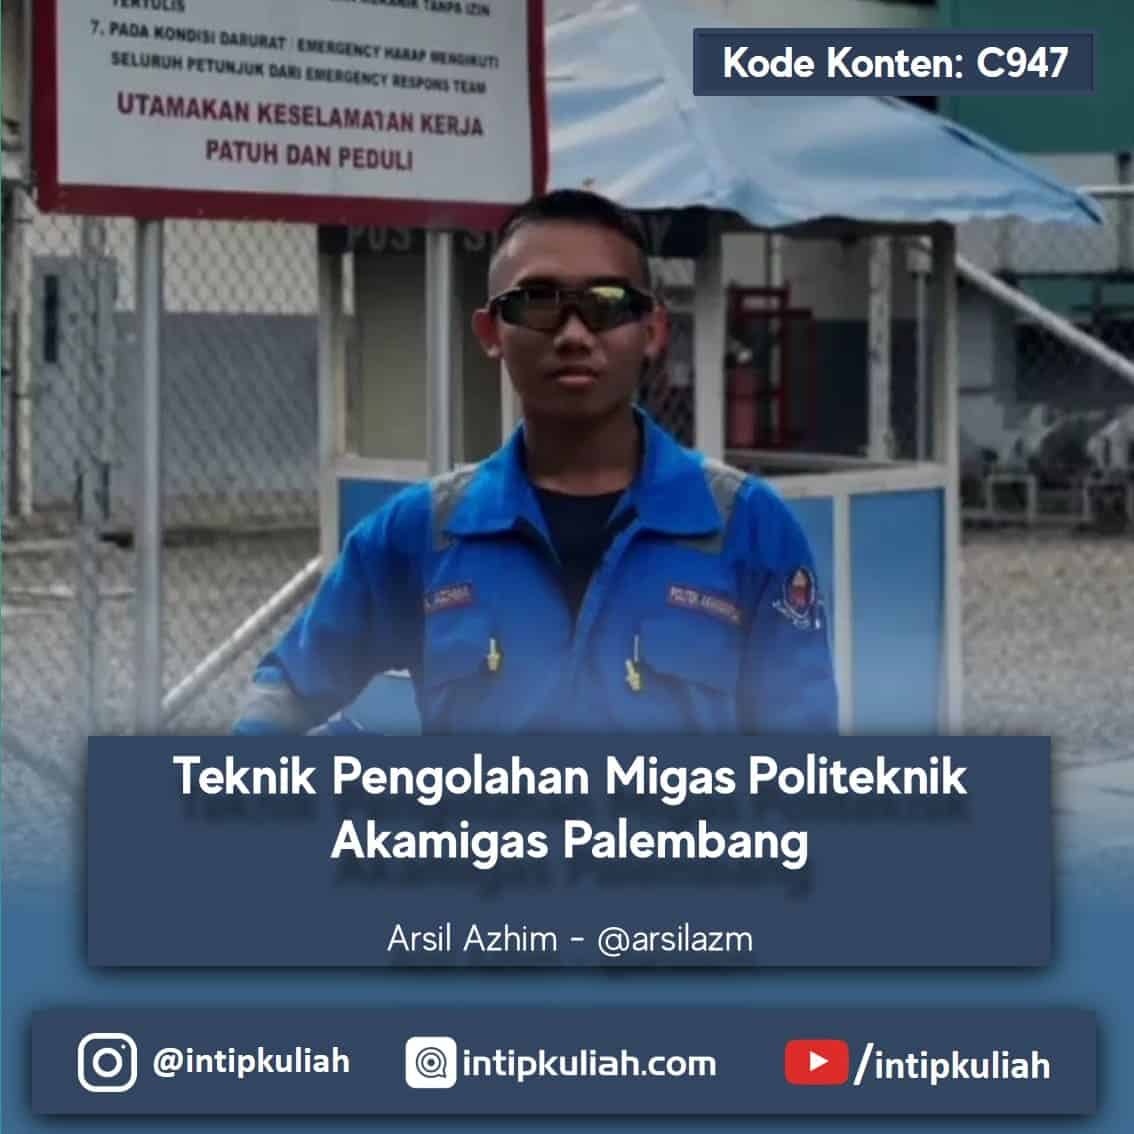 Teknik Pengolahan Migas Politeknik Akamigas Palembang (Arsil)